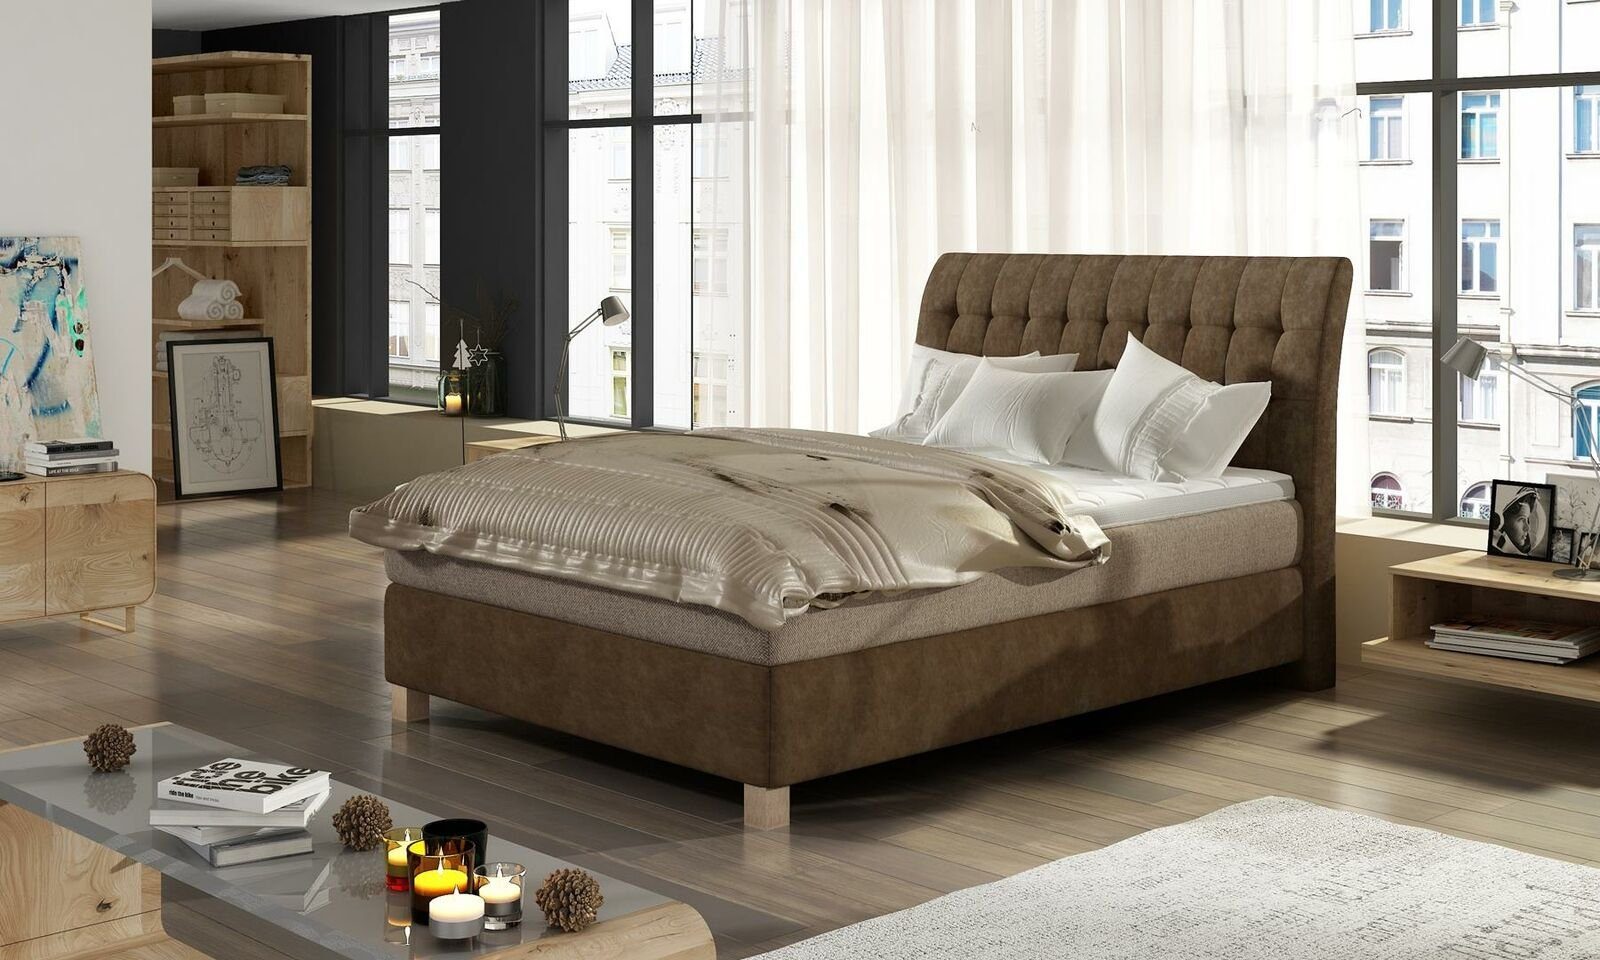 JVmoebel Bett, Design Betten 140x200cm Einrichtung Schlafzimmer Möbel Doppel Bett Braun